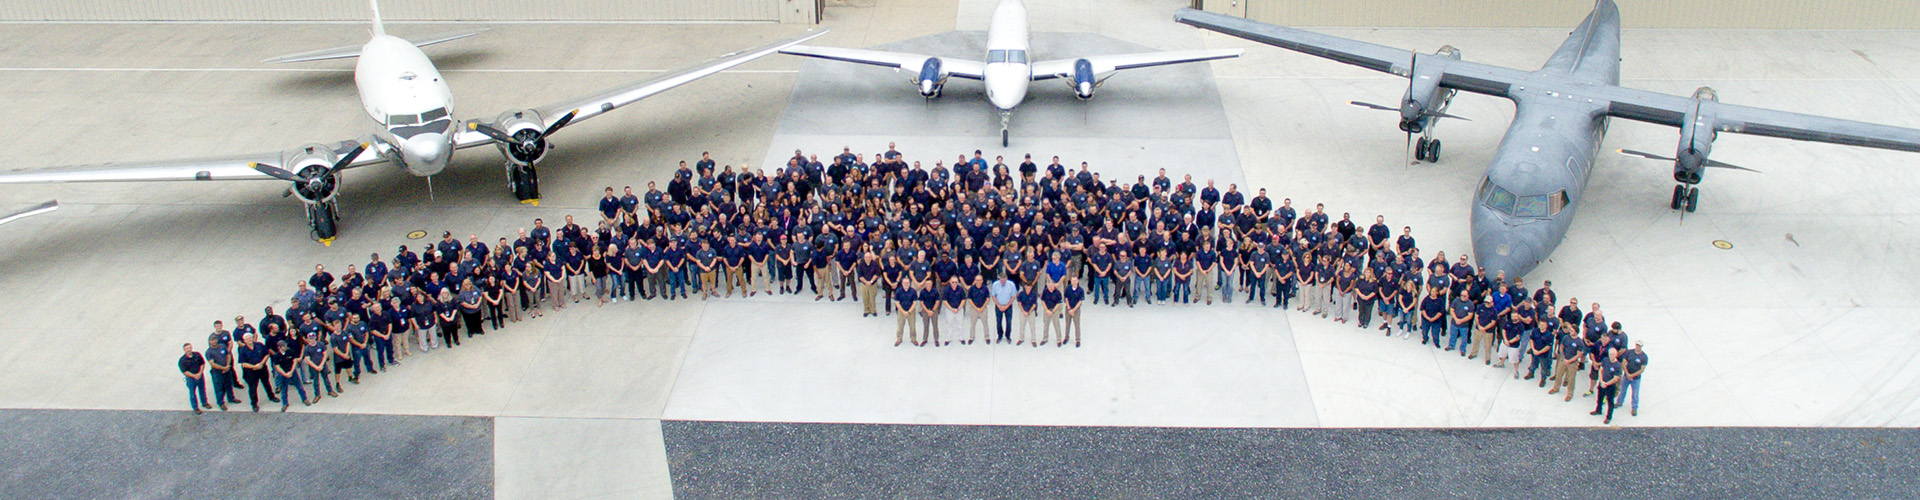 Dynamic Aviation employees outside of hangars